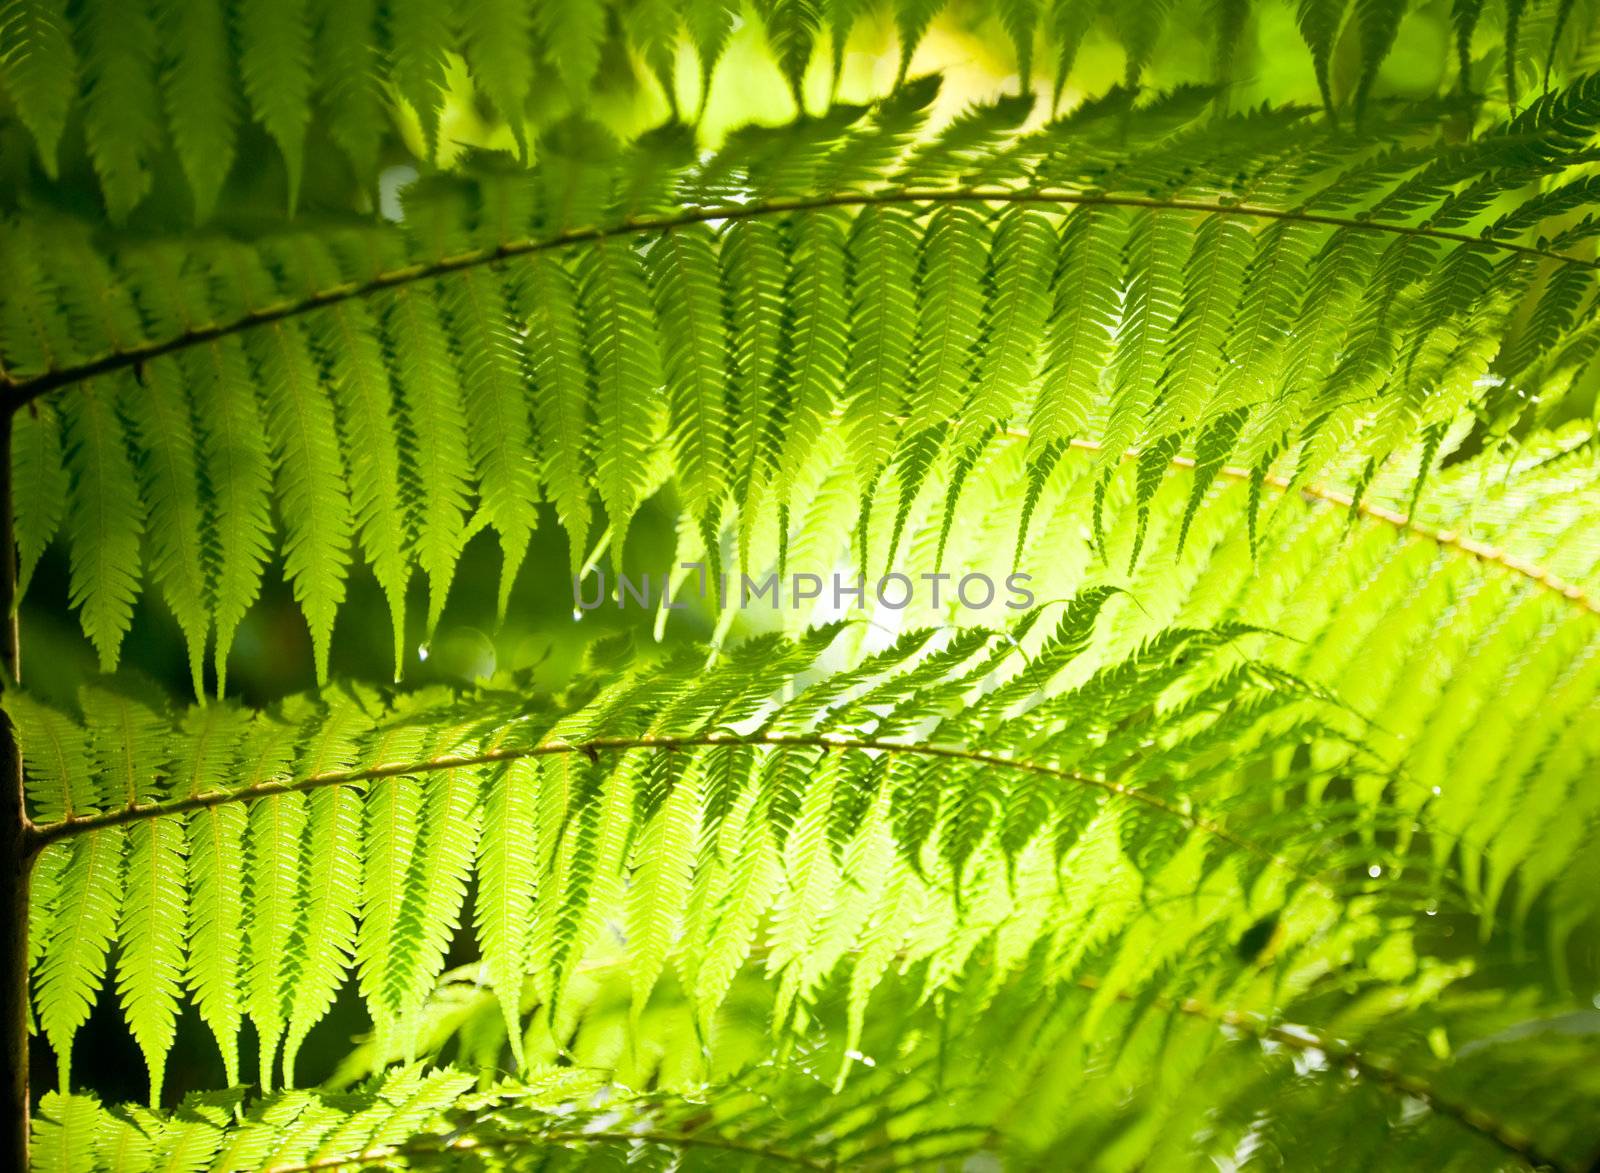 Sun shining through fern leaves in a rainforest in New Zealand